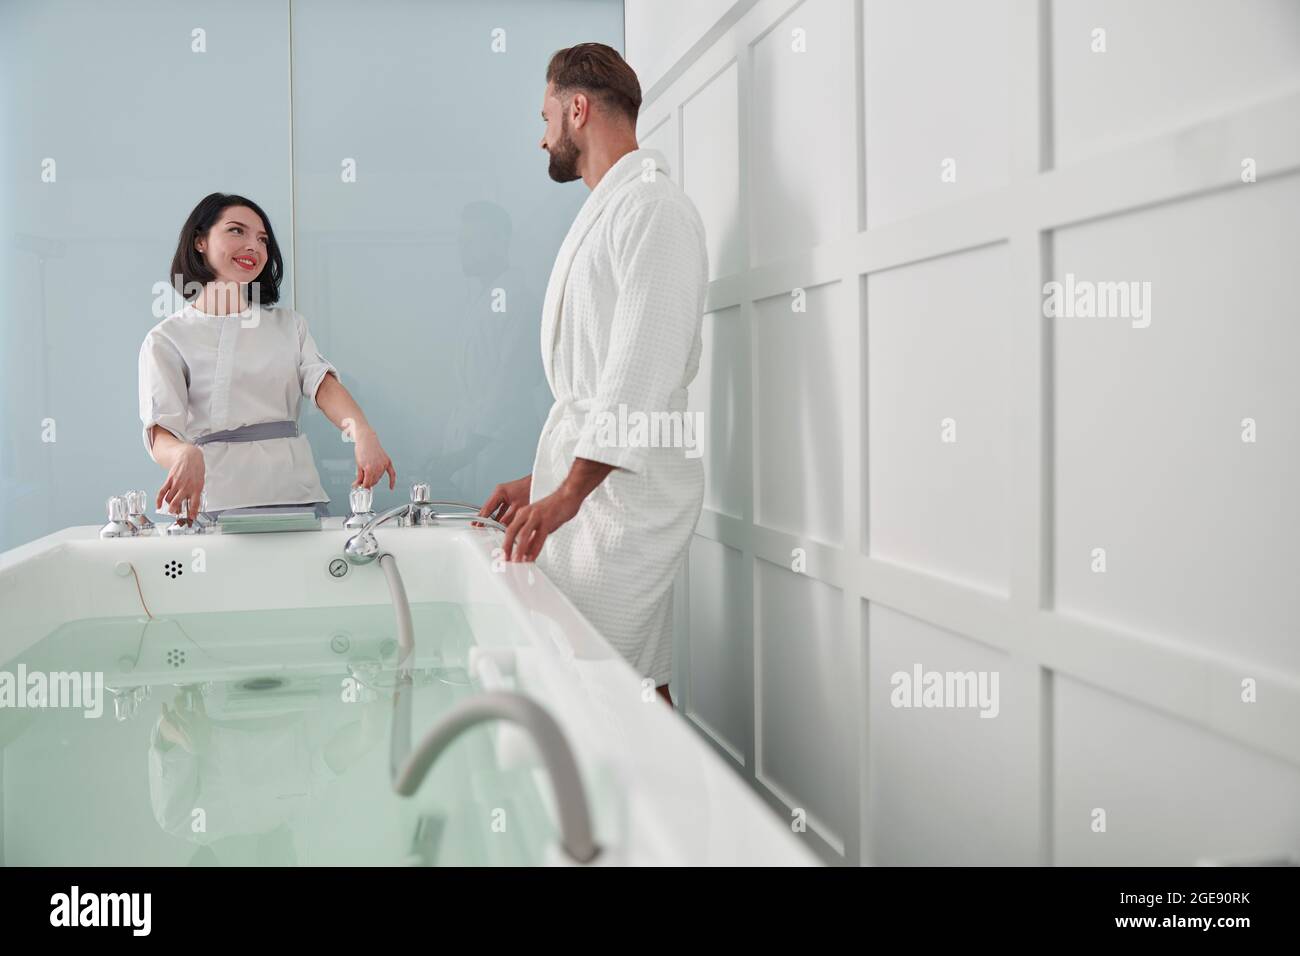 Woman in uniform shows hydro massage bath to man guest in modern salon Stock Photo